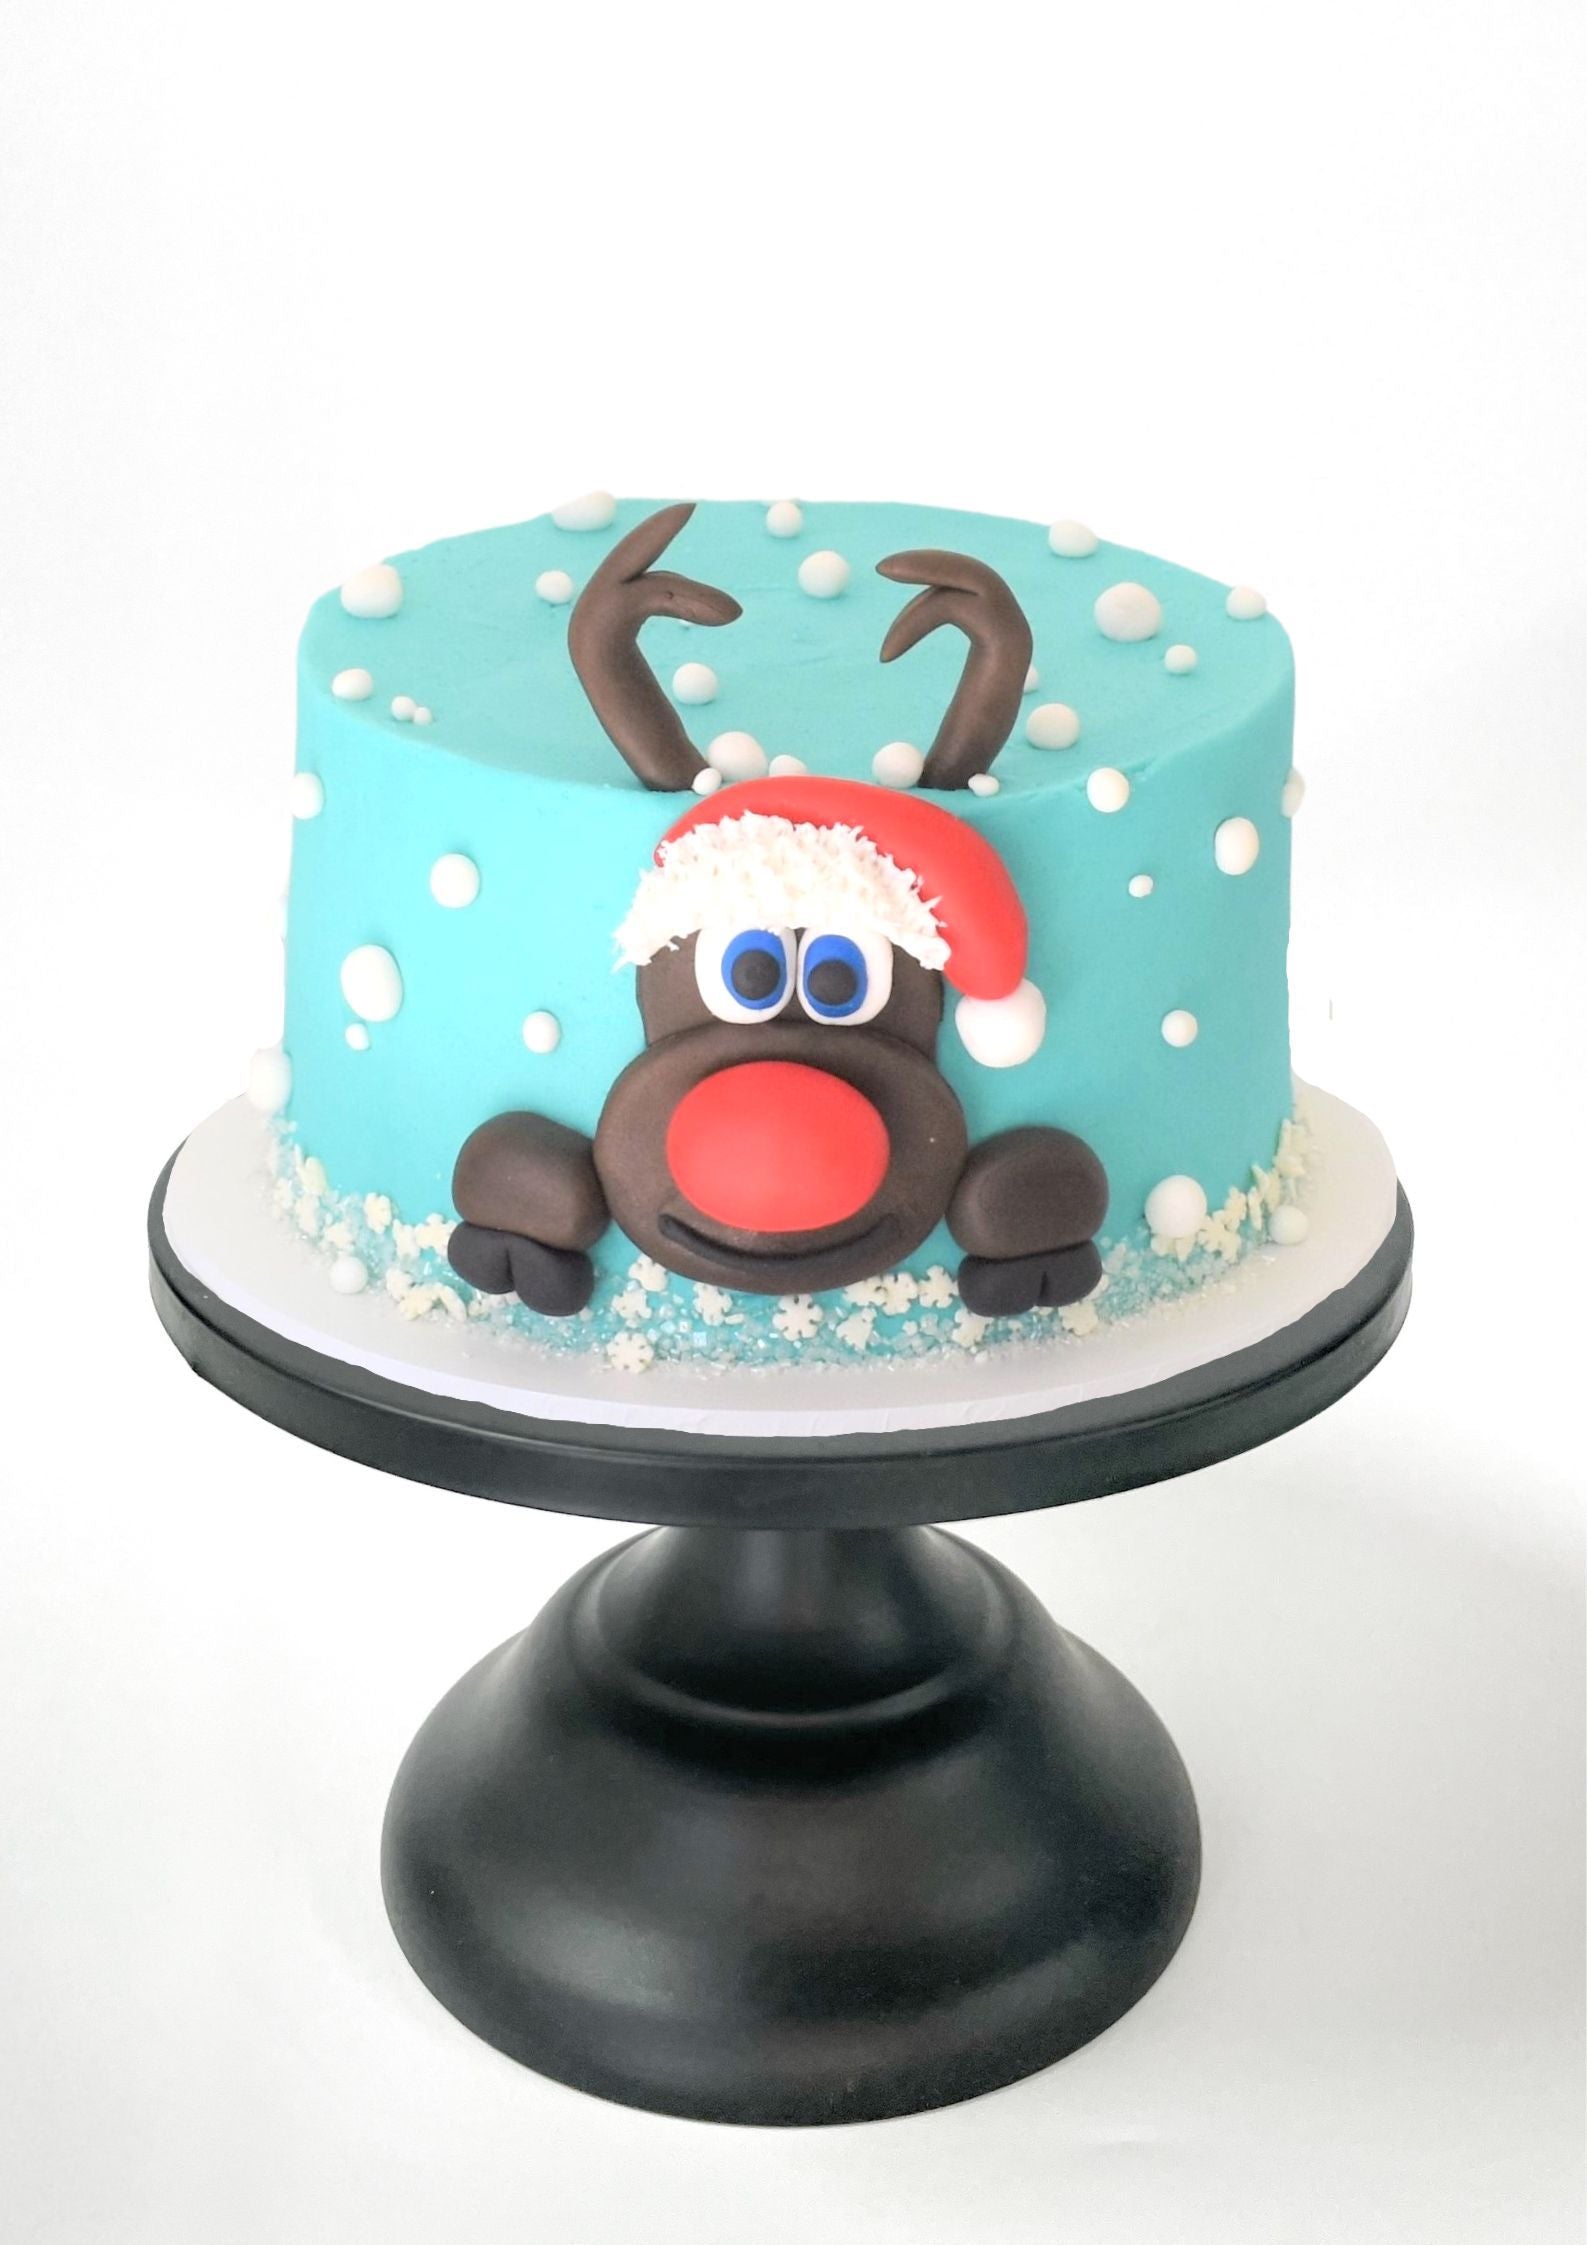 Rudolph DIY Cake Kit, Christmas Cake, Rudolph the red nosed reindeer cake